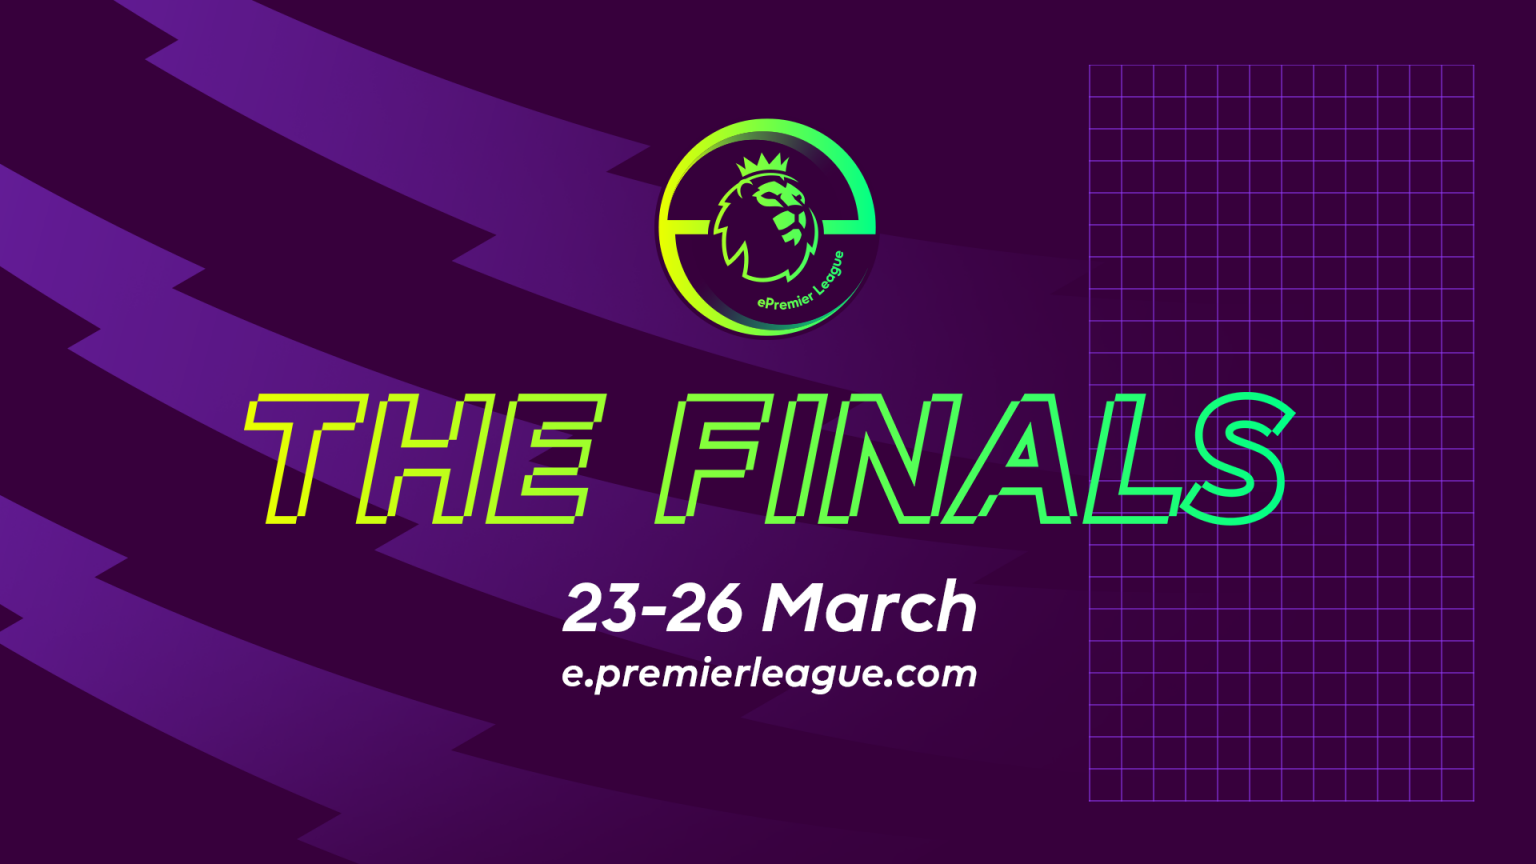 Gfinity to host 2020/21 ePremier League Online Finals next week